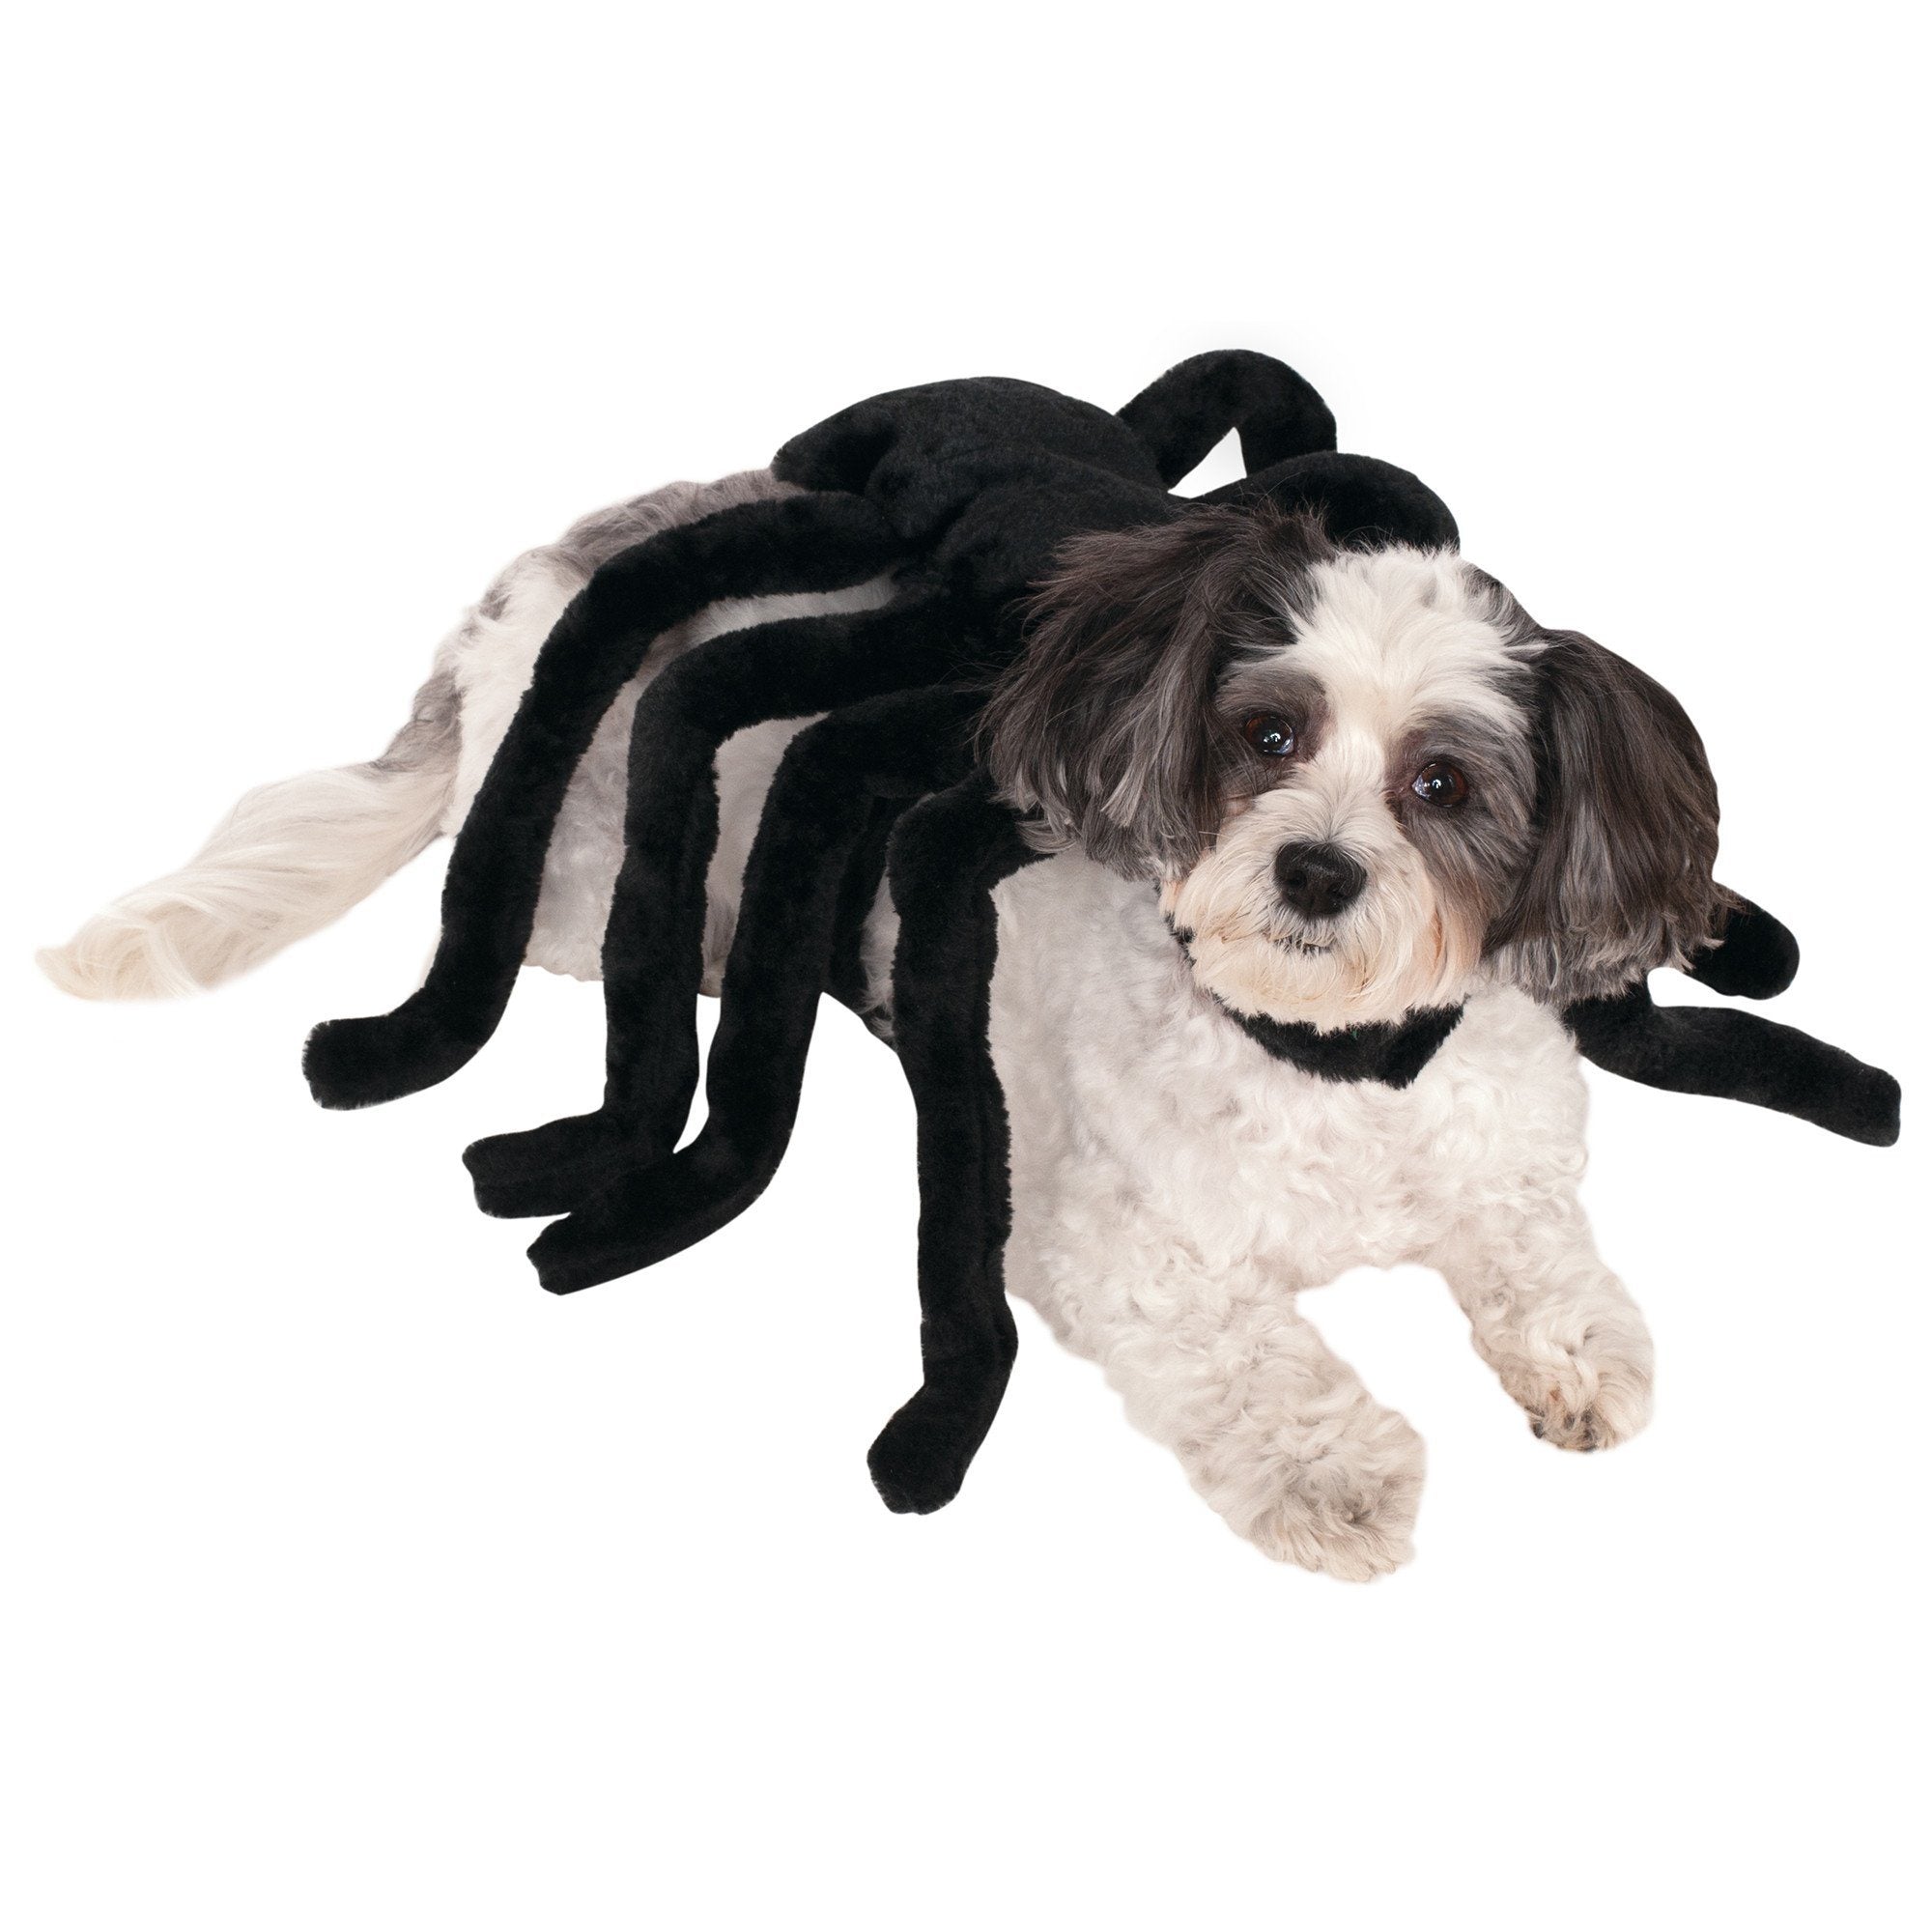 Spider Dog Costume - S